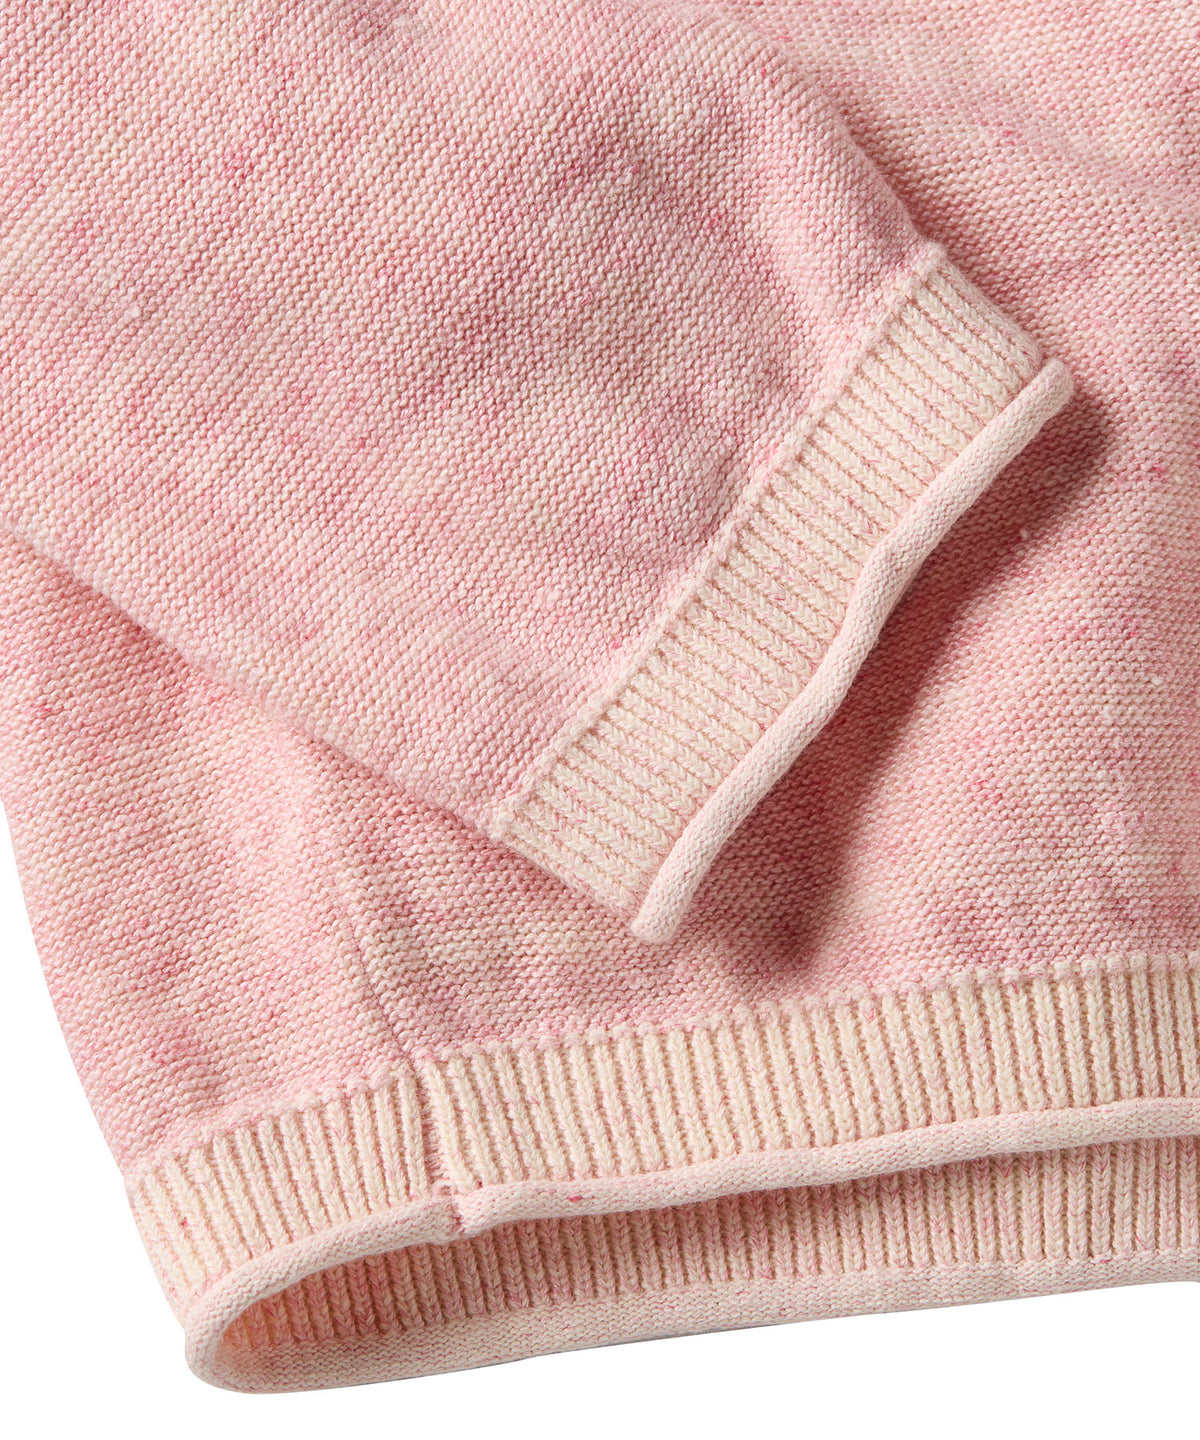 Cotton-Linen Crewneck Sweater